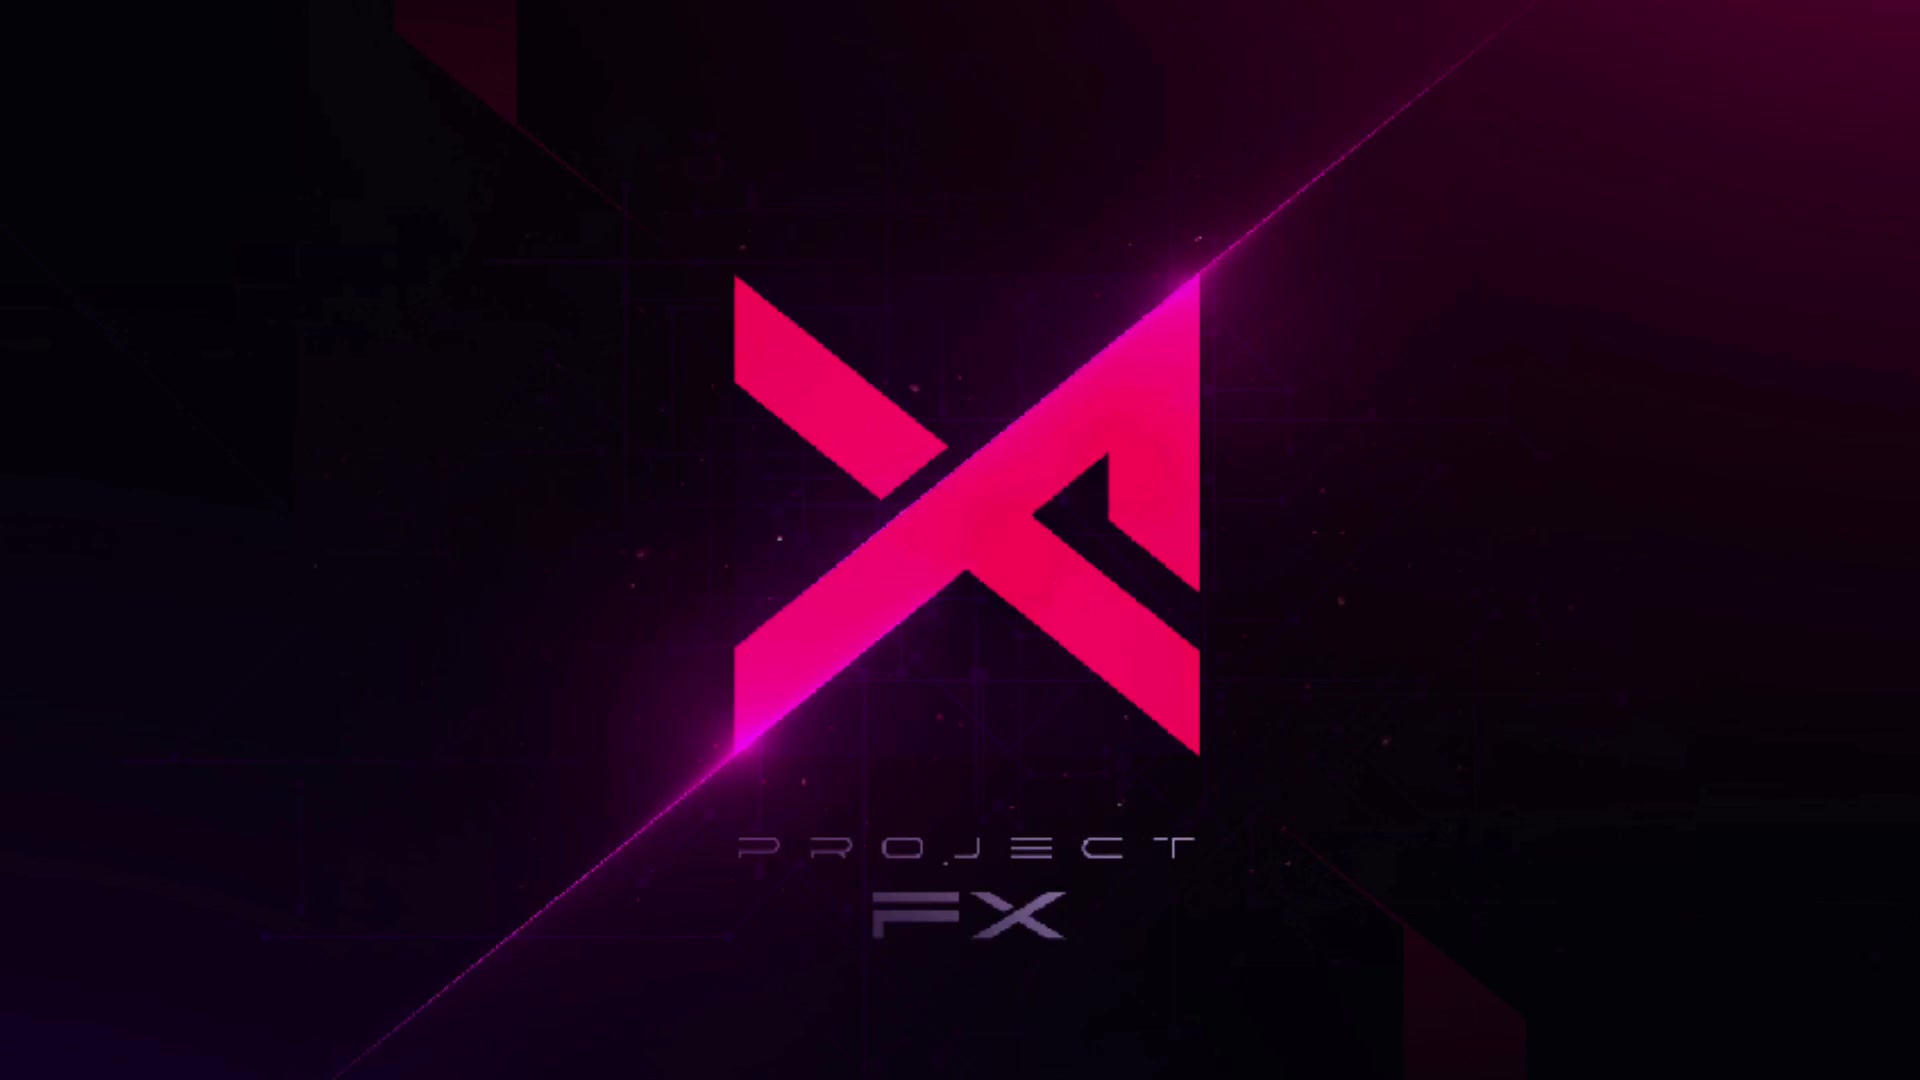 <Project FX> 3月16日版本更新公告 (重要说明!!!)